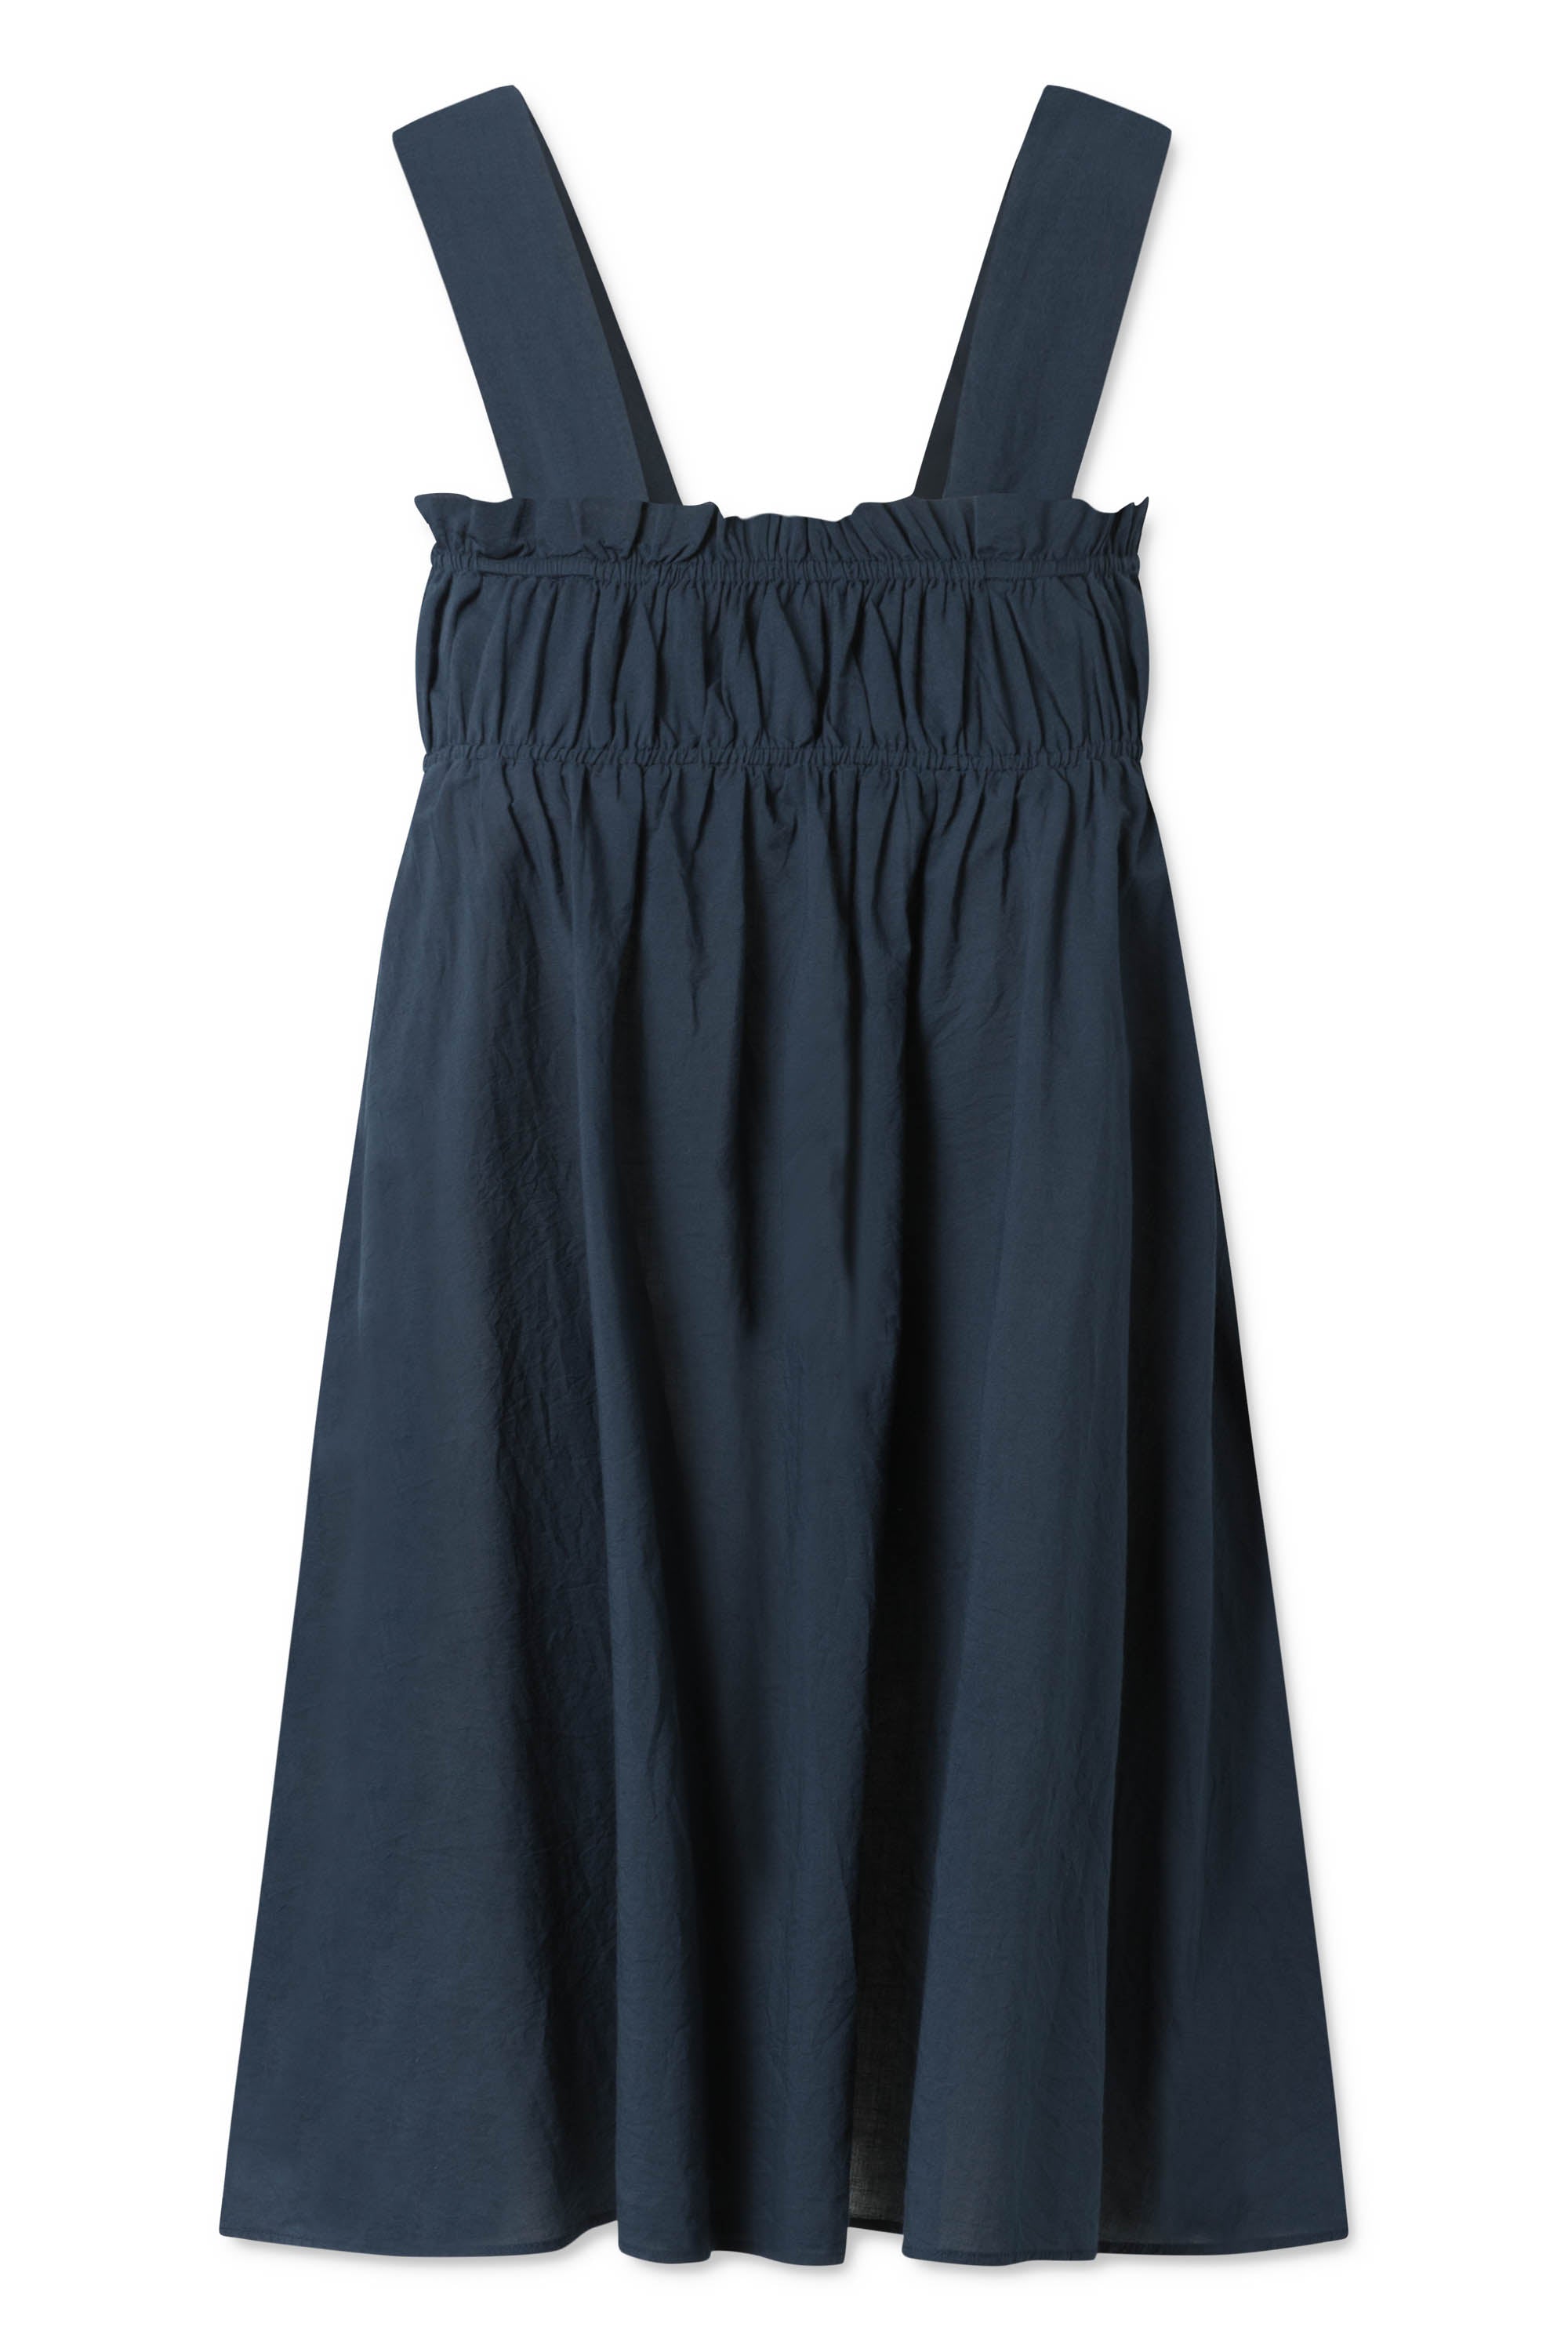 nué notes Verona Dress - Navy DRESSES NAVY